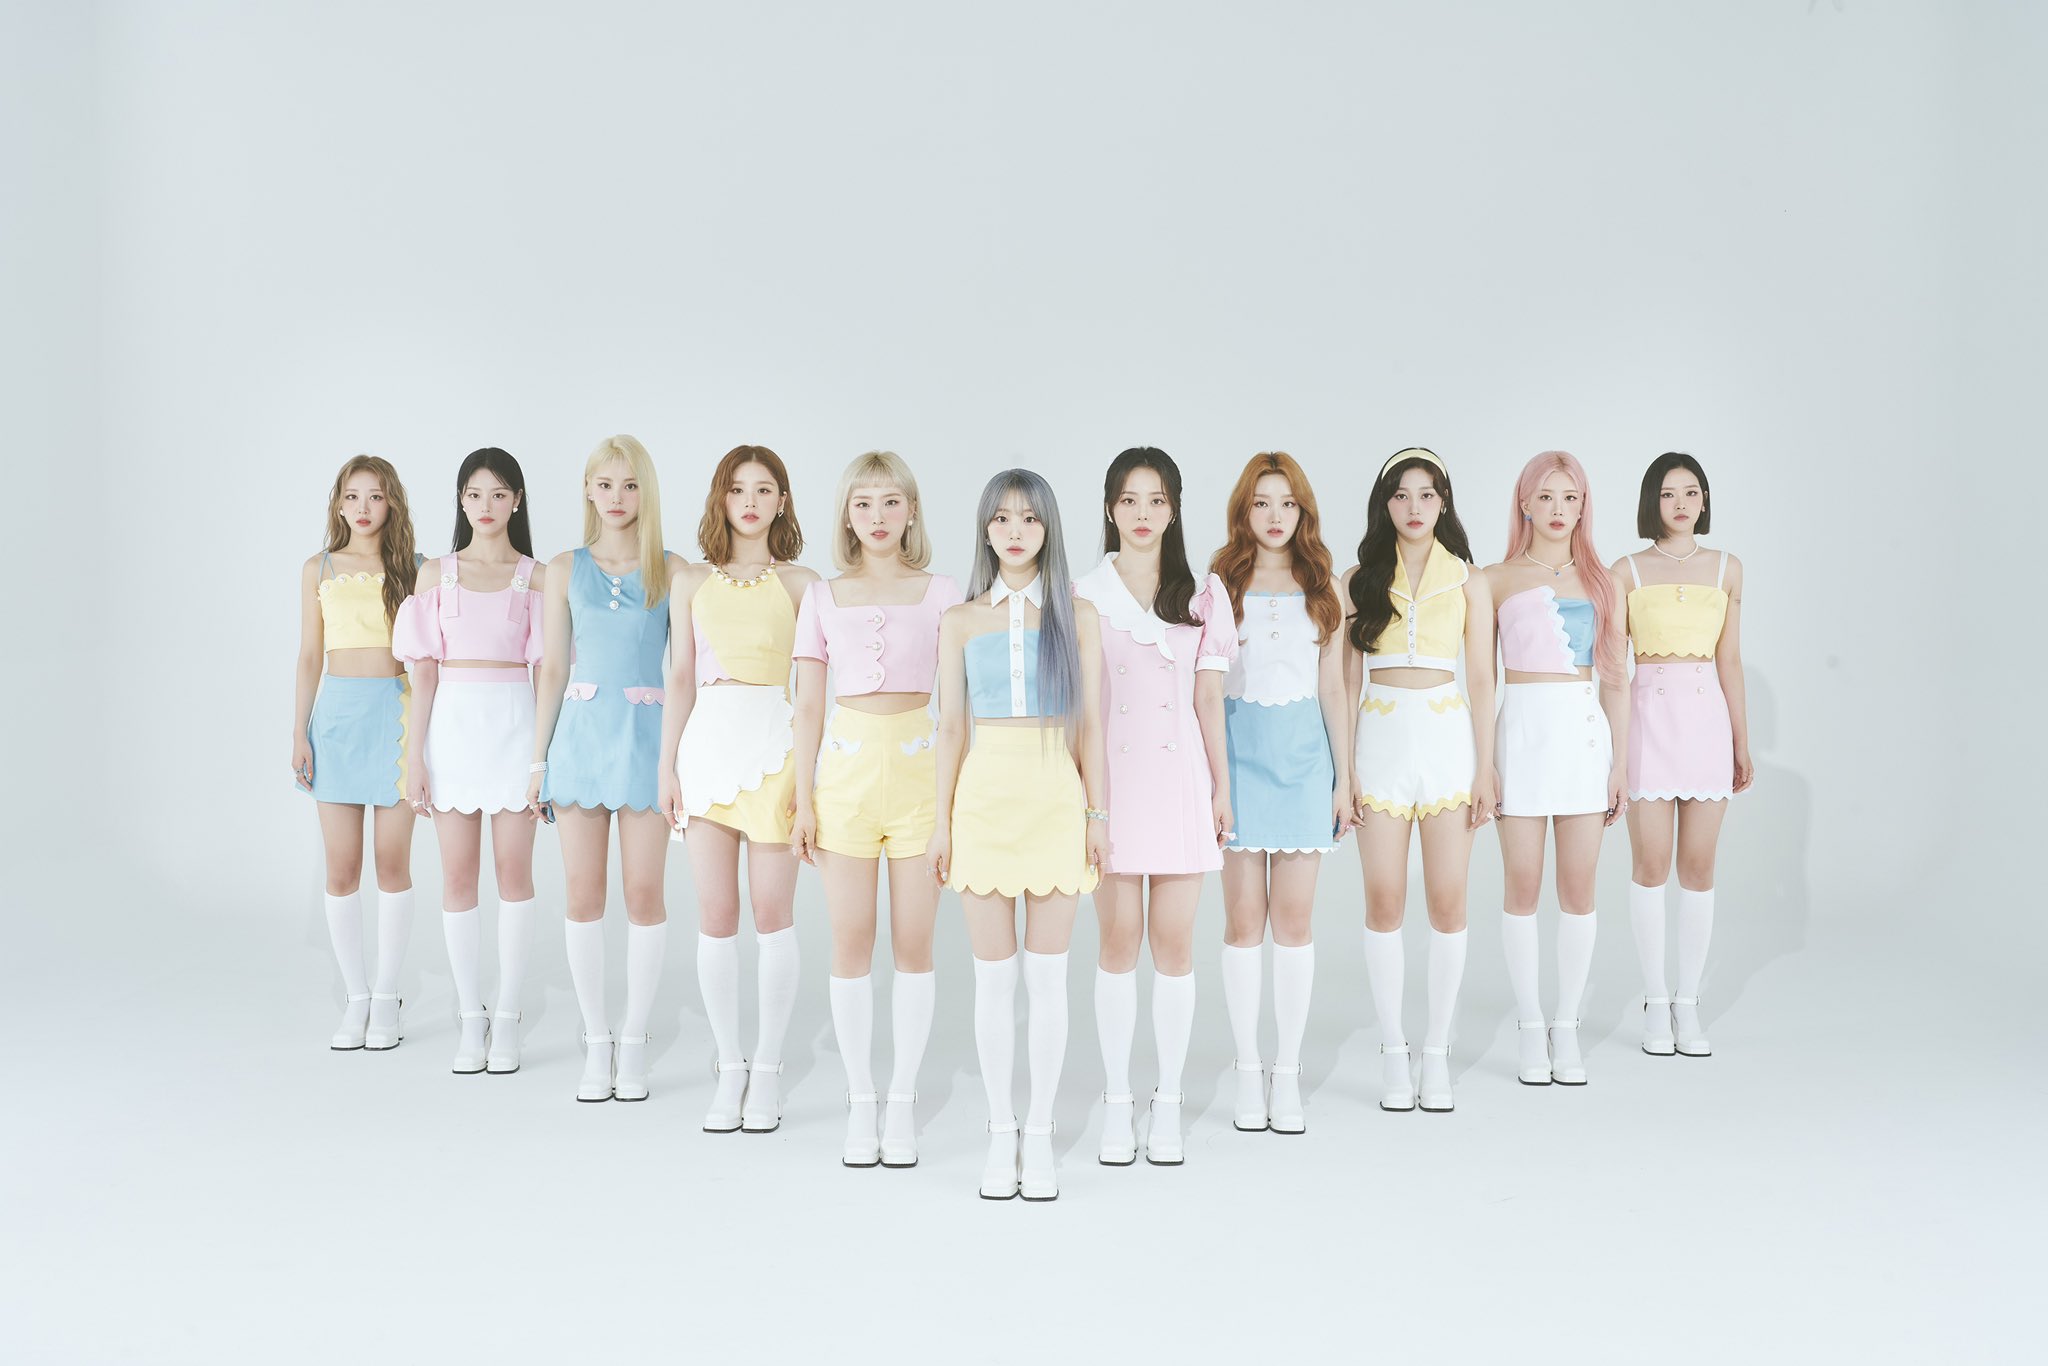 Loona Luminous Group Concept Teaser Picture Image Photo Kpop K-Concept 1